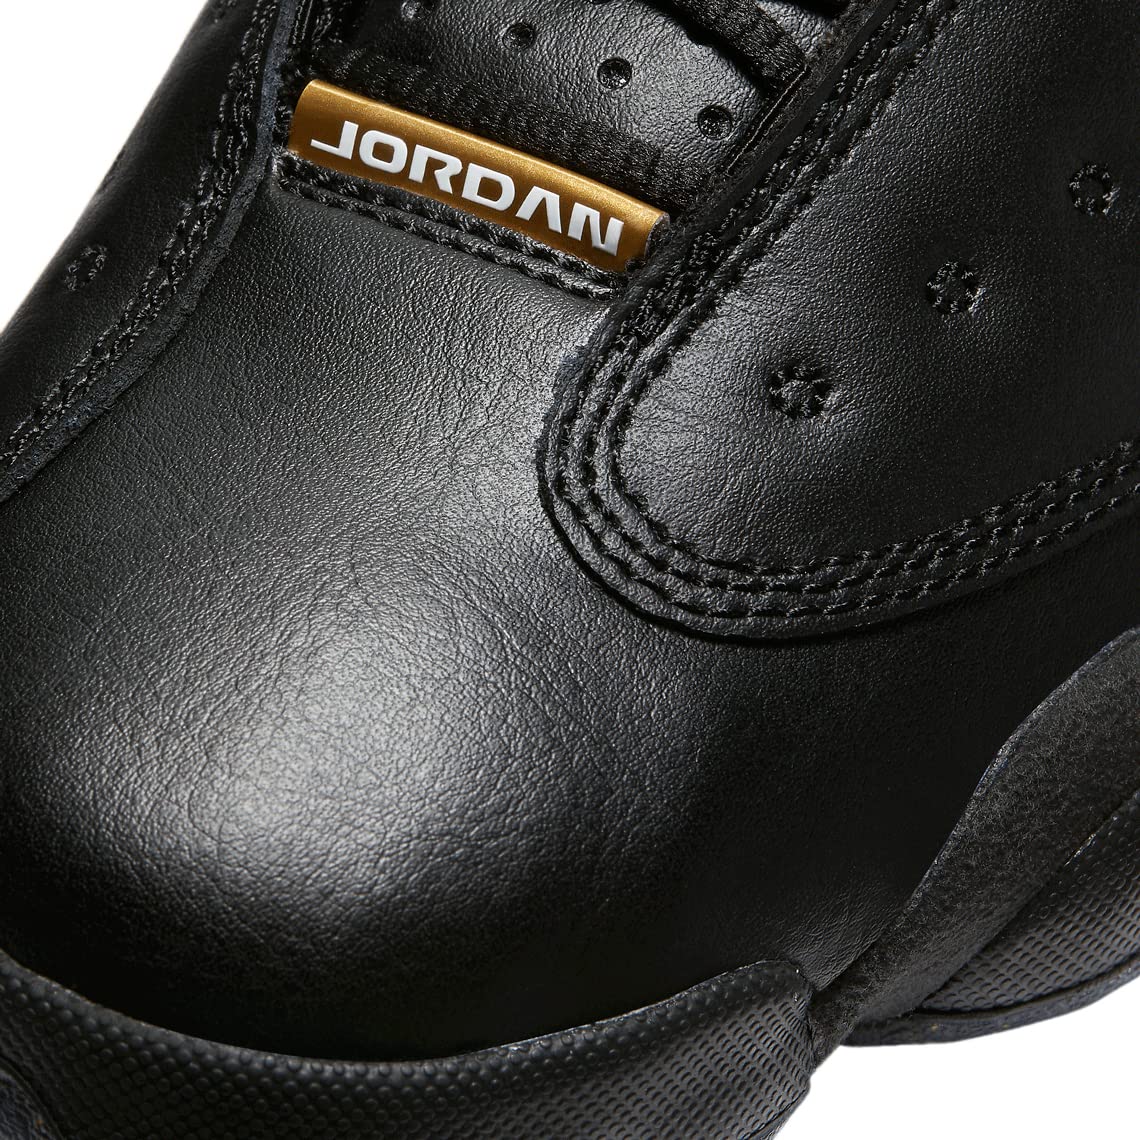 Jordan Kid's Shoes Nike Air 13 Retro (GS) Black Metallic Gold DC9443-007 (M